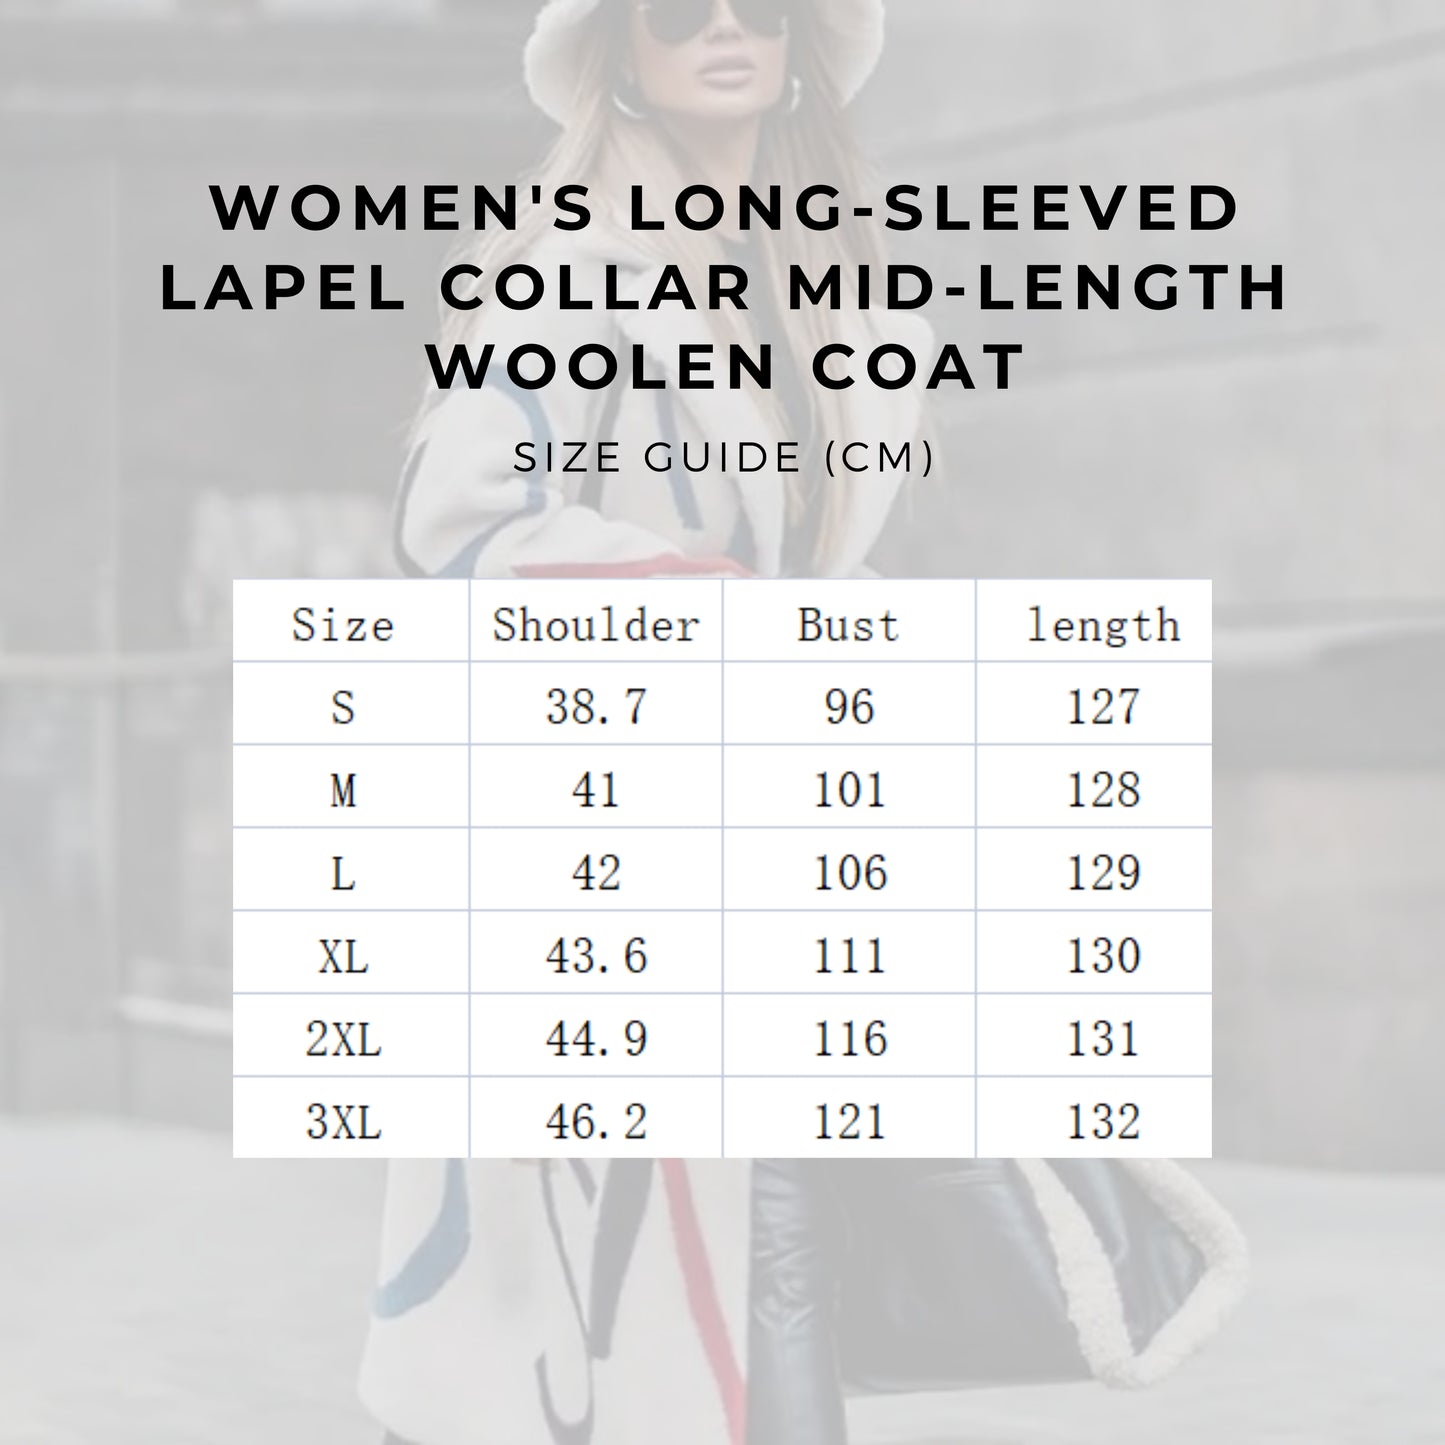 Women's Long-sleeved Lapel Collar Mid-length Woolen Coat